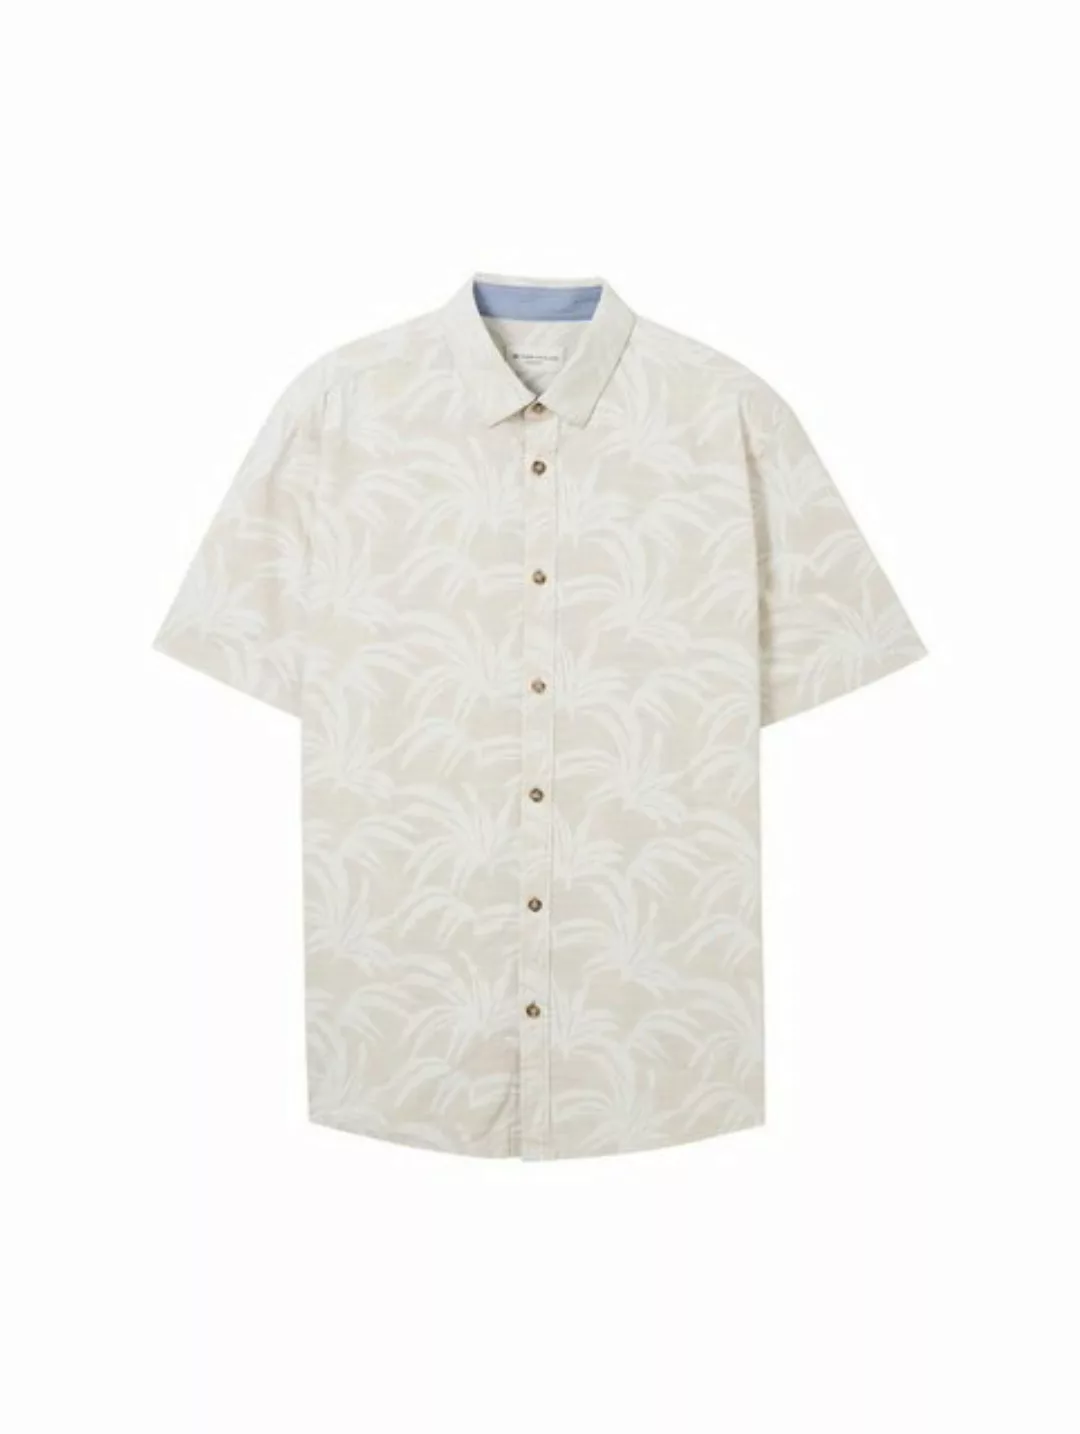 TOM TAILOR T-Shirt printed slubyarn shirt, beige brushed leaf design günstig online kaufen